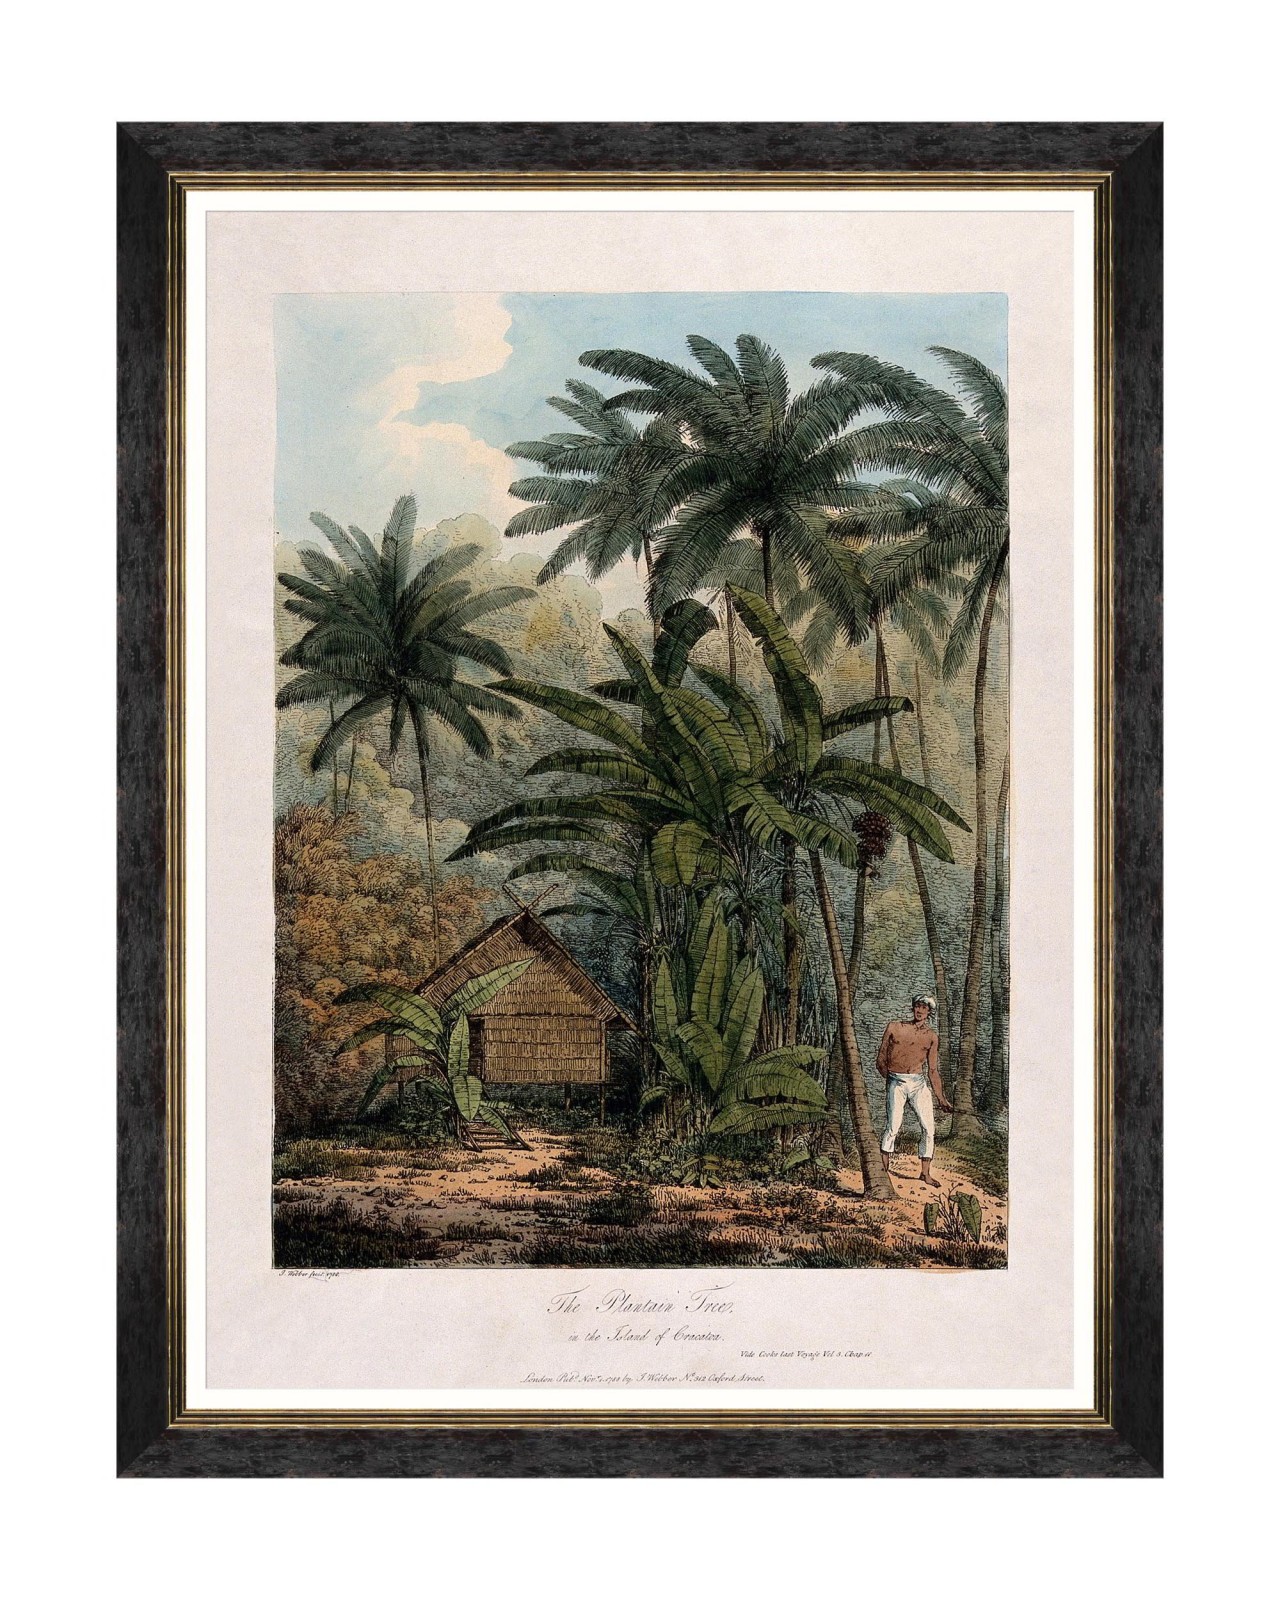 images/productimages/small/trees-of-krakatoa-the-plantain-tree-framed-art-60x80cm-fa13201.jpg